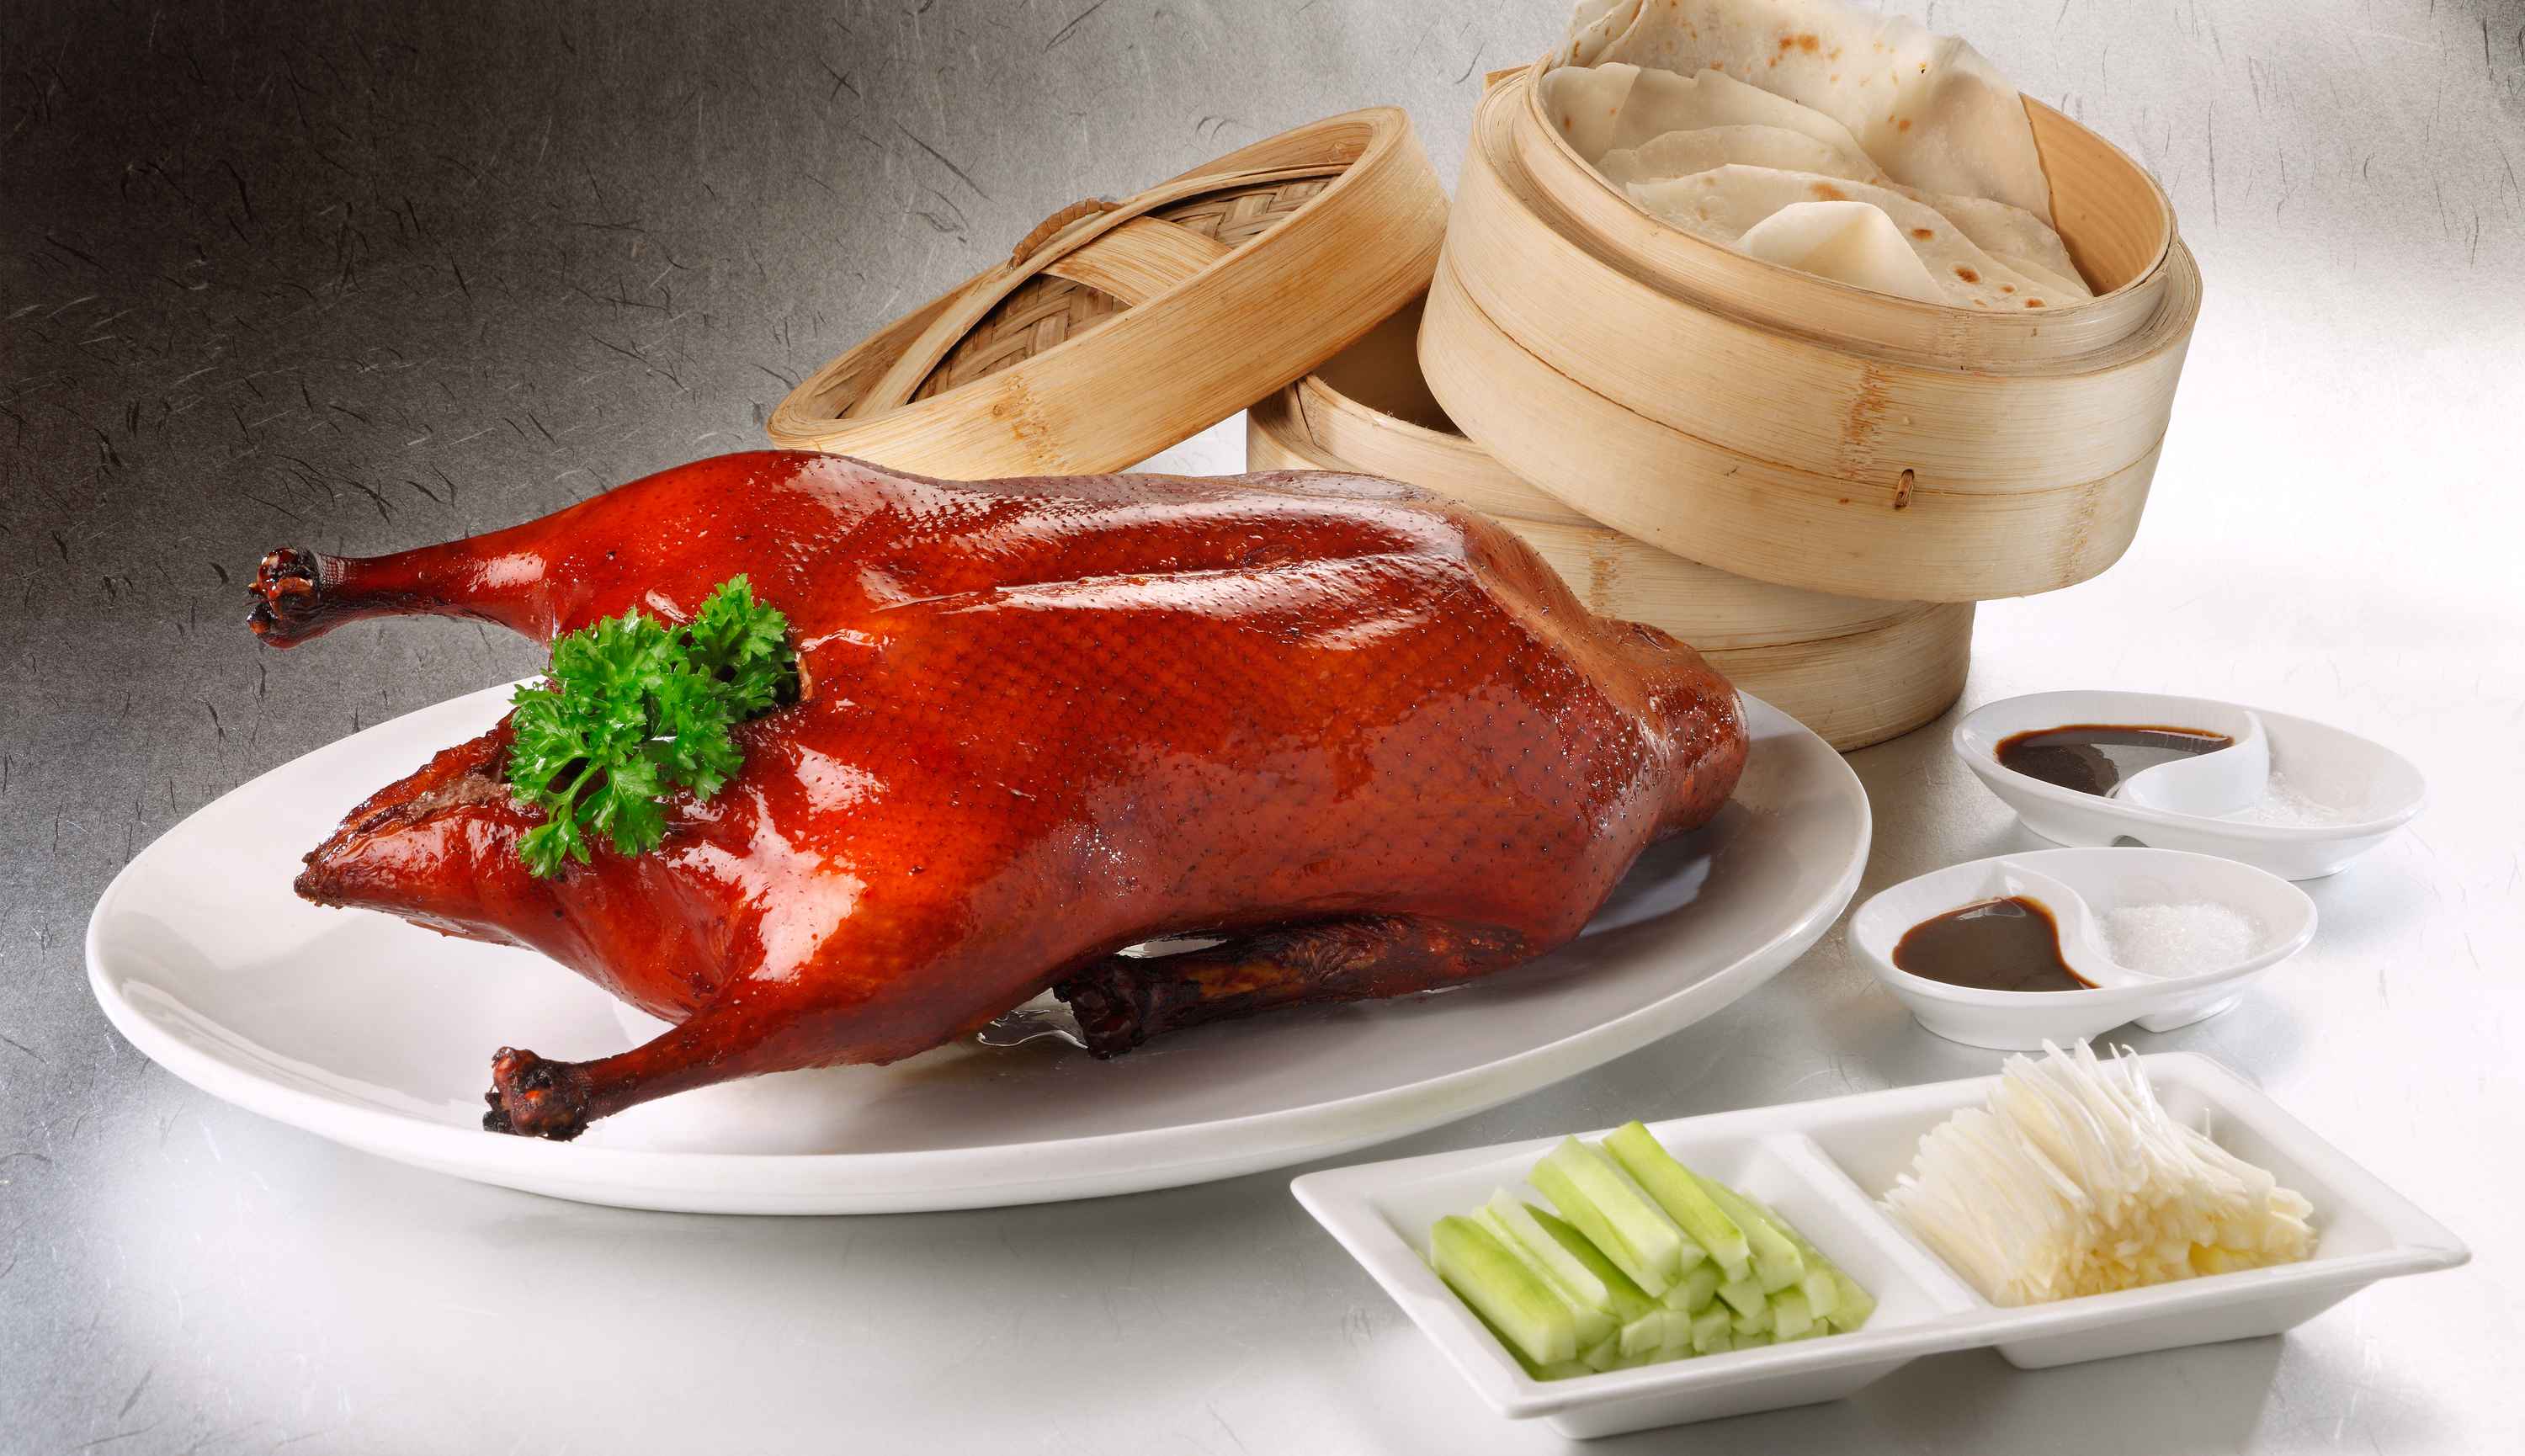 Imperial Treasure - Beijing Style Roasted Duck